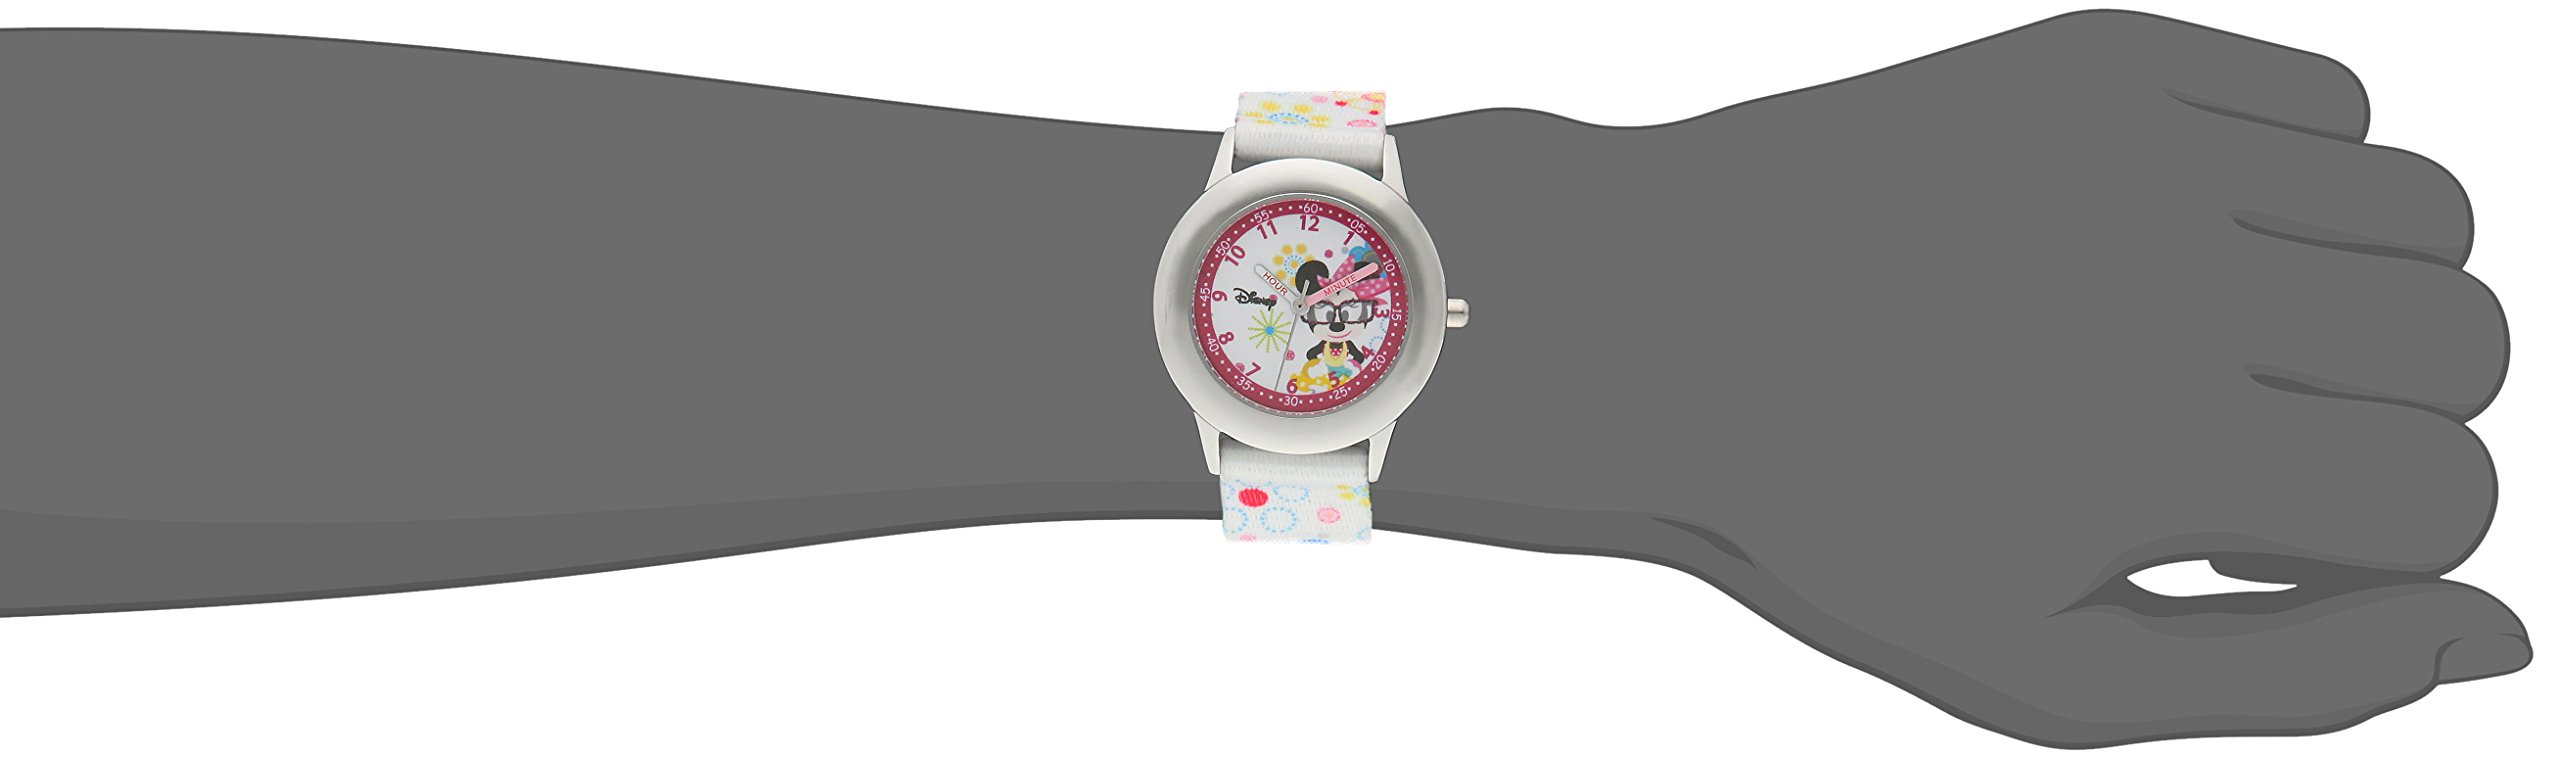 Disney Minnie Mouse Kids' Stainless Steel Time Teacher Analog Quartz Watch